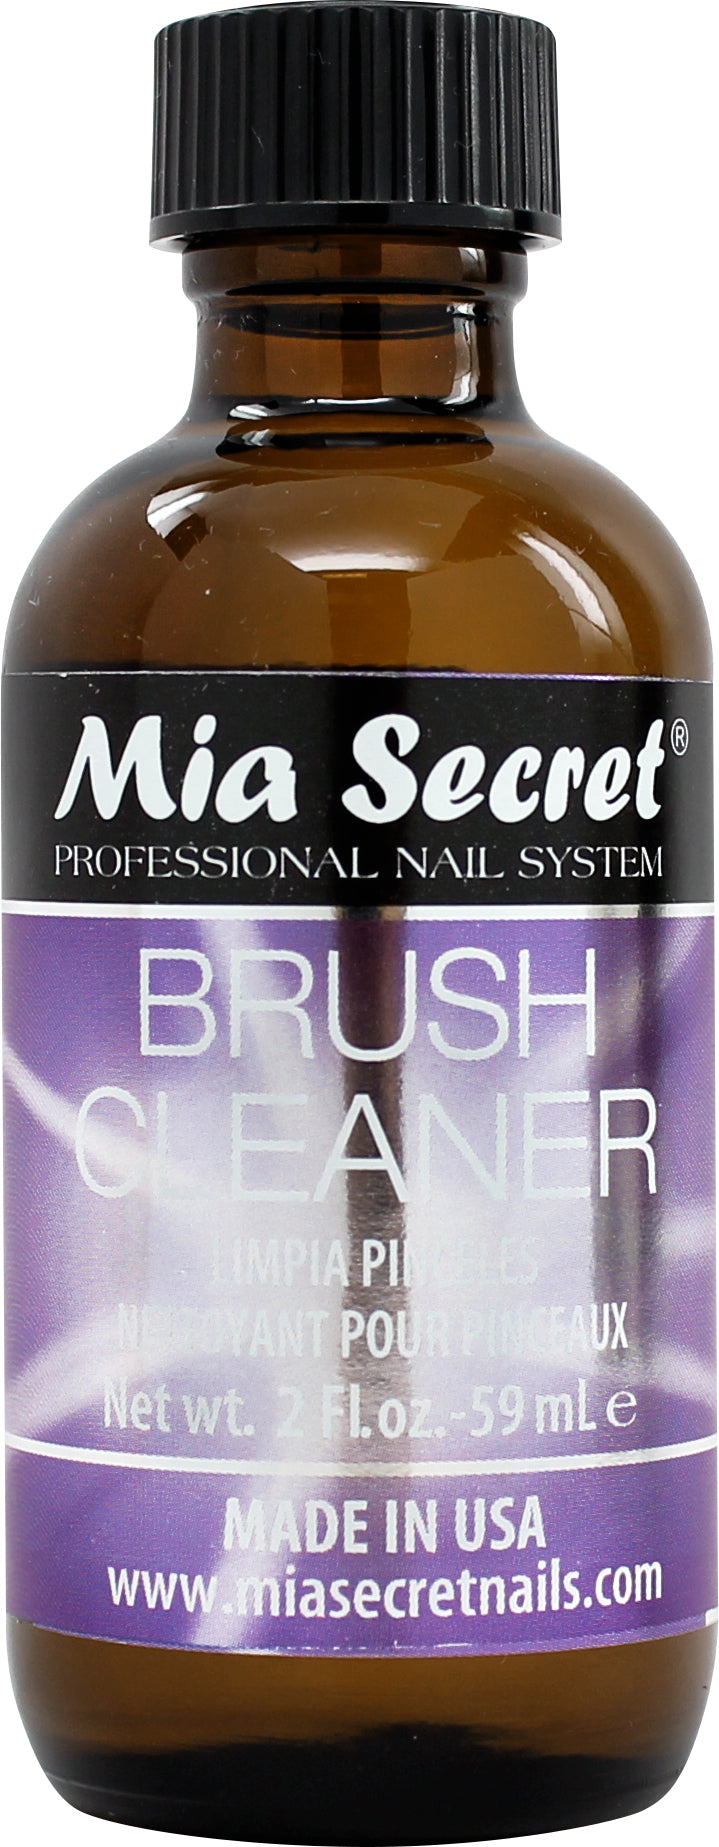 Mia Secret Brush Cleaner 1 oz.